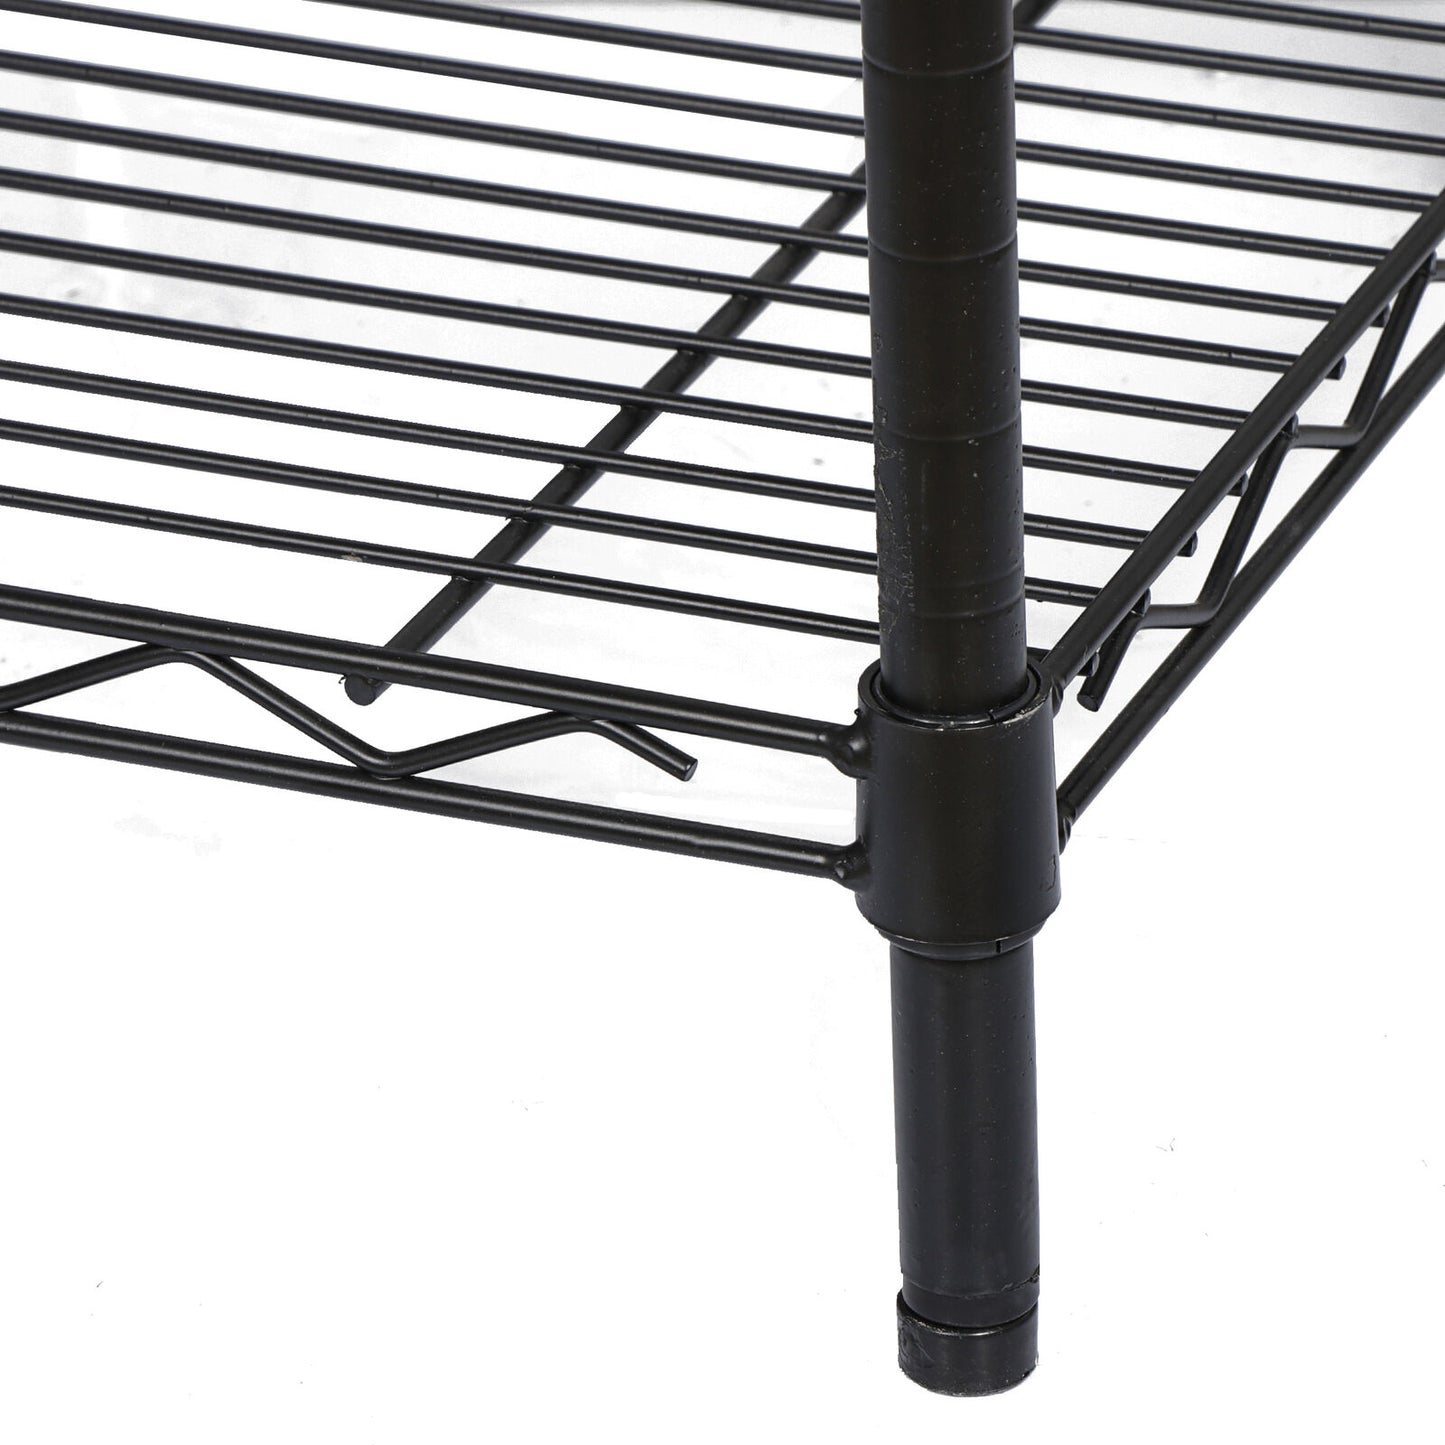 2x 4 Tier Steel Wire Shelf Rack Heavy Duty Storage Shelving Unit Kitchen Pantry